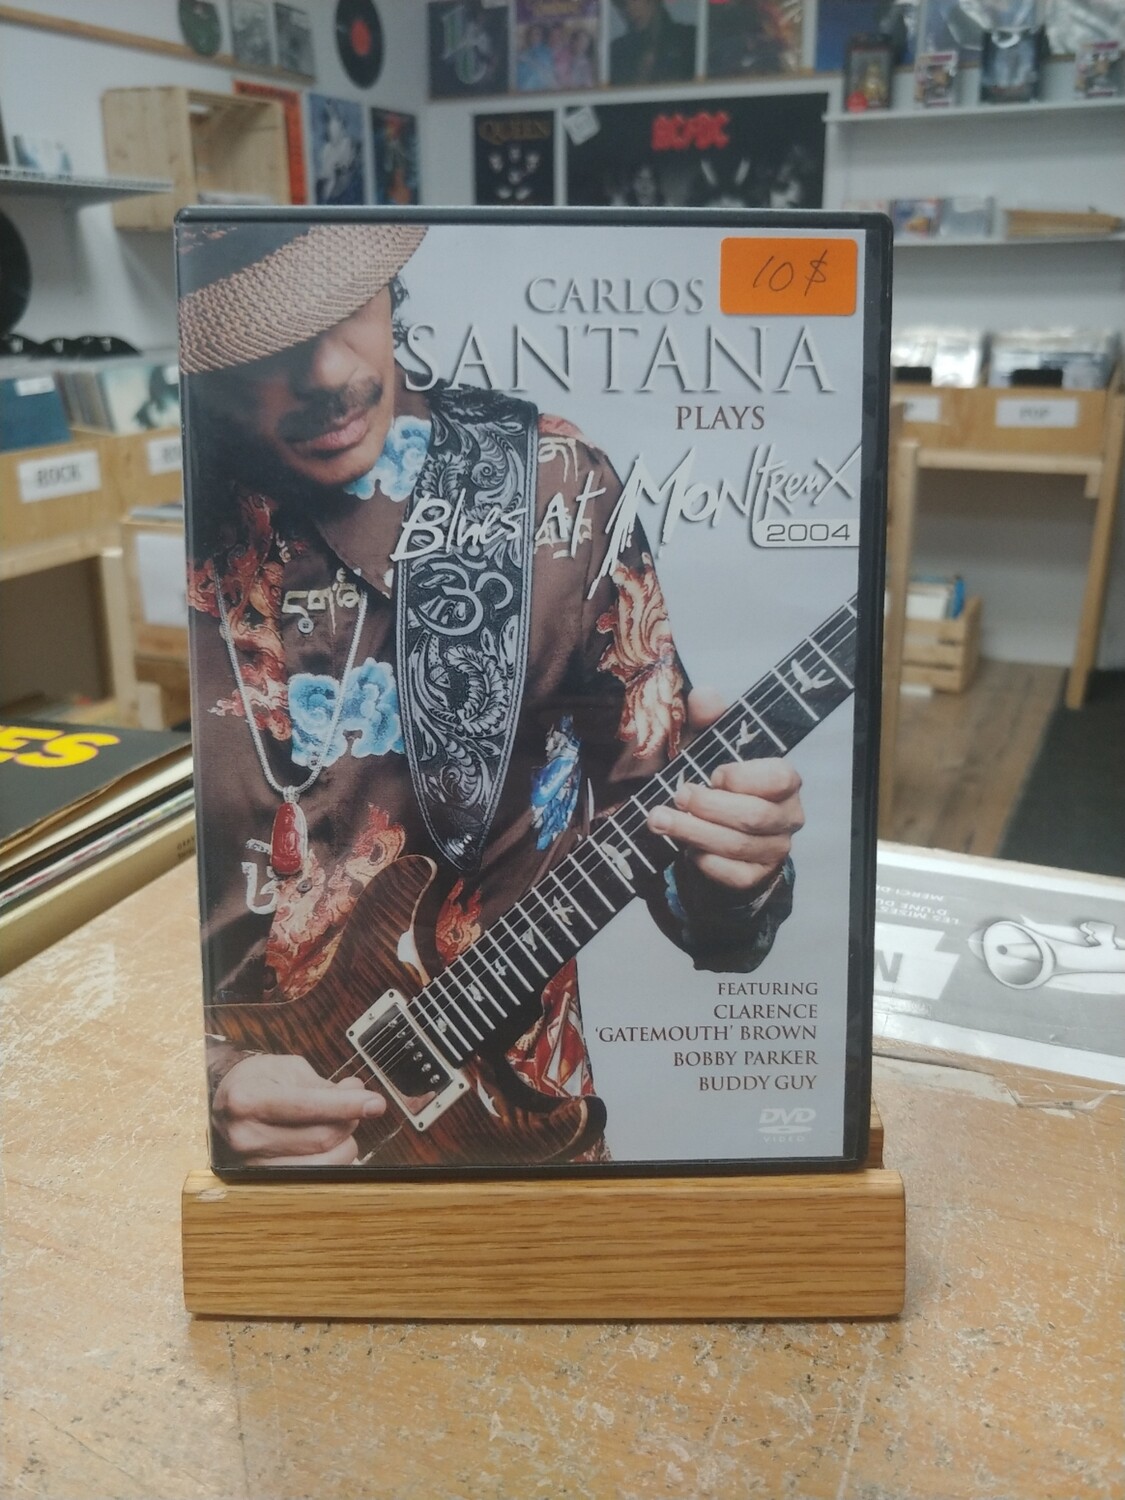 Santana - Blues at Montreux (DVD)